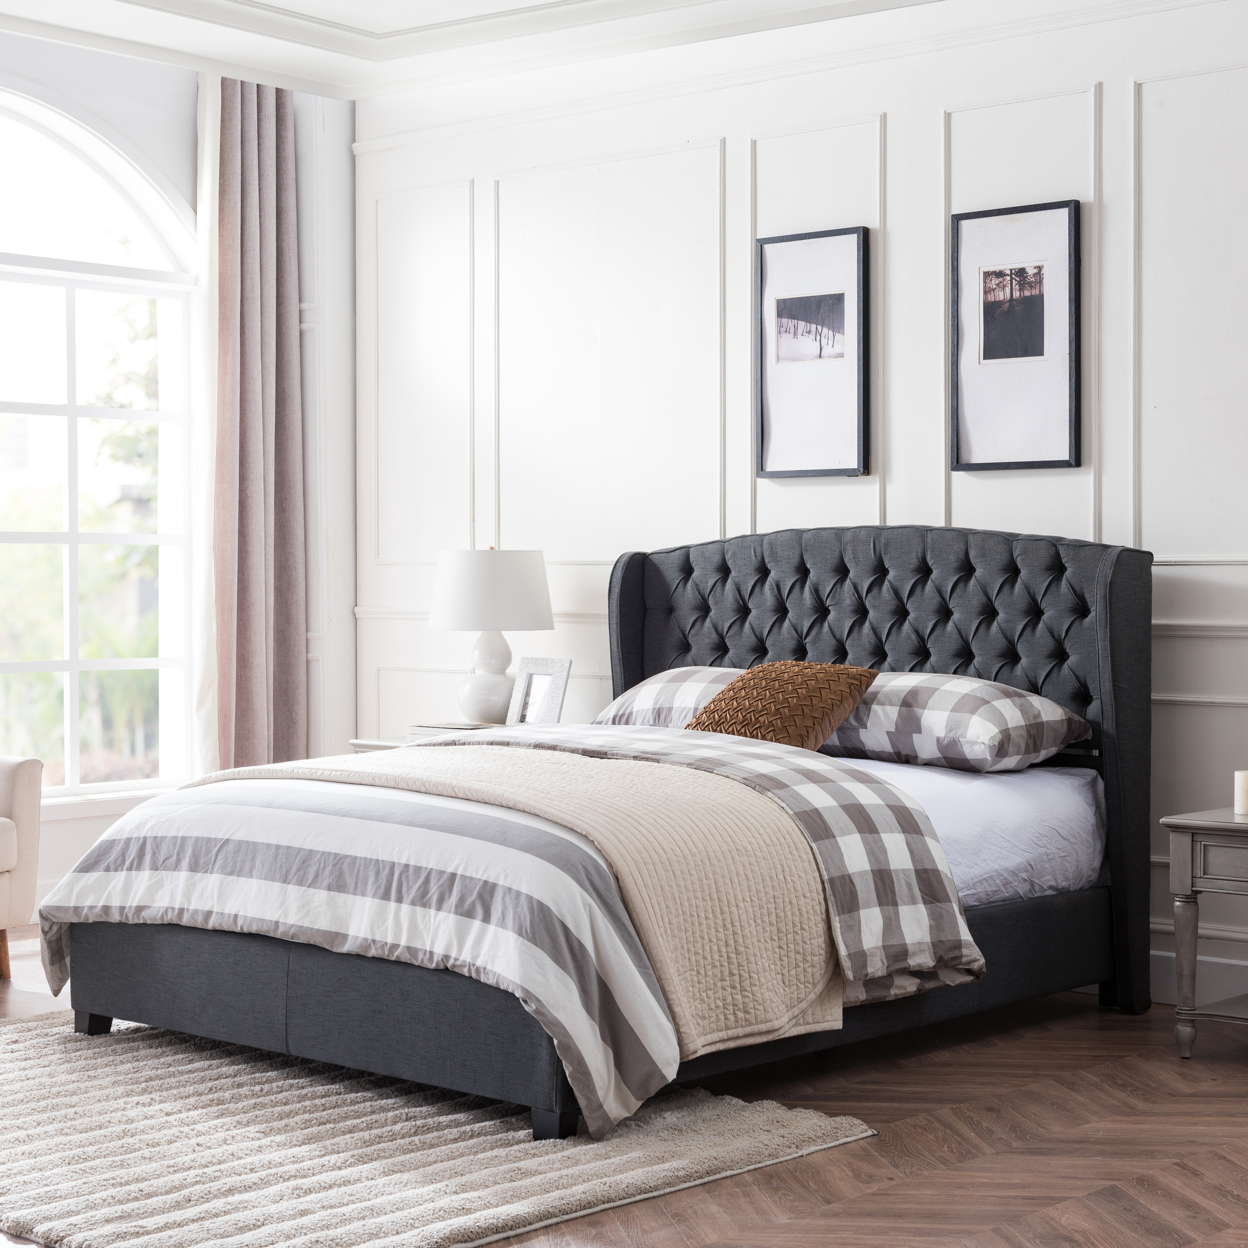 Elizabeth Fully-Upholstered King-Size Platform Bed Frame, Low-Profile, Contemporary - Light Gray